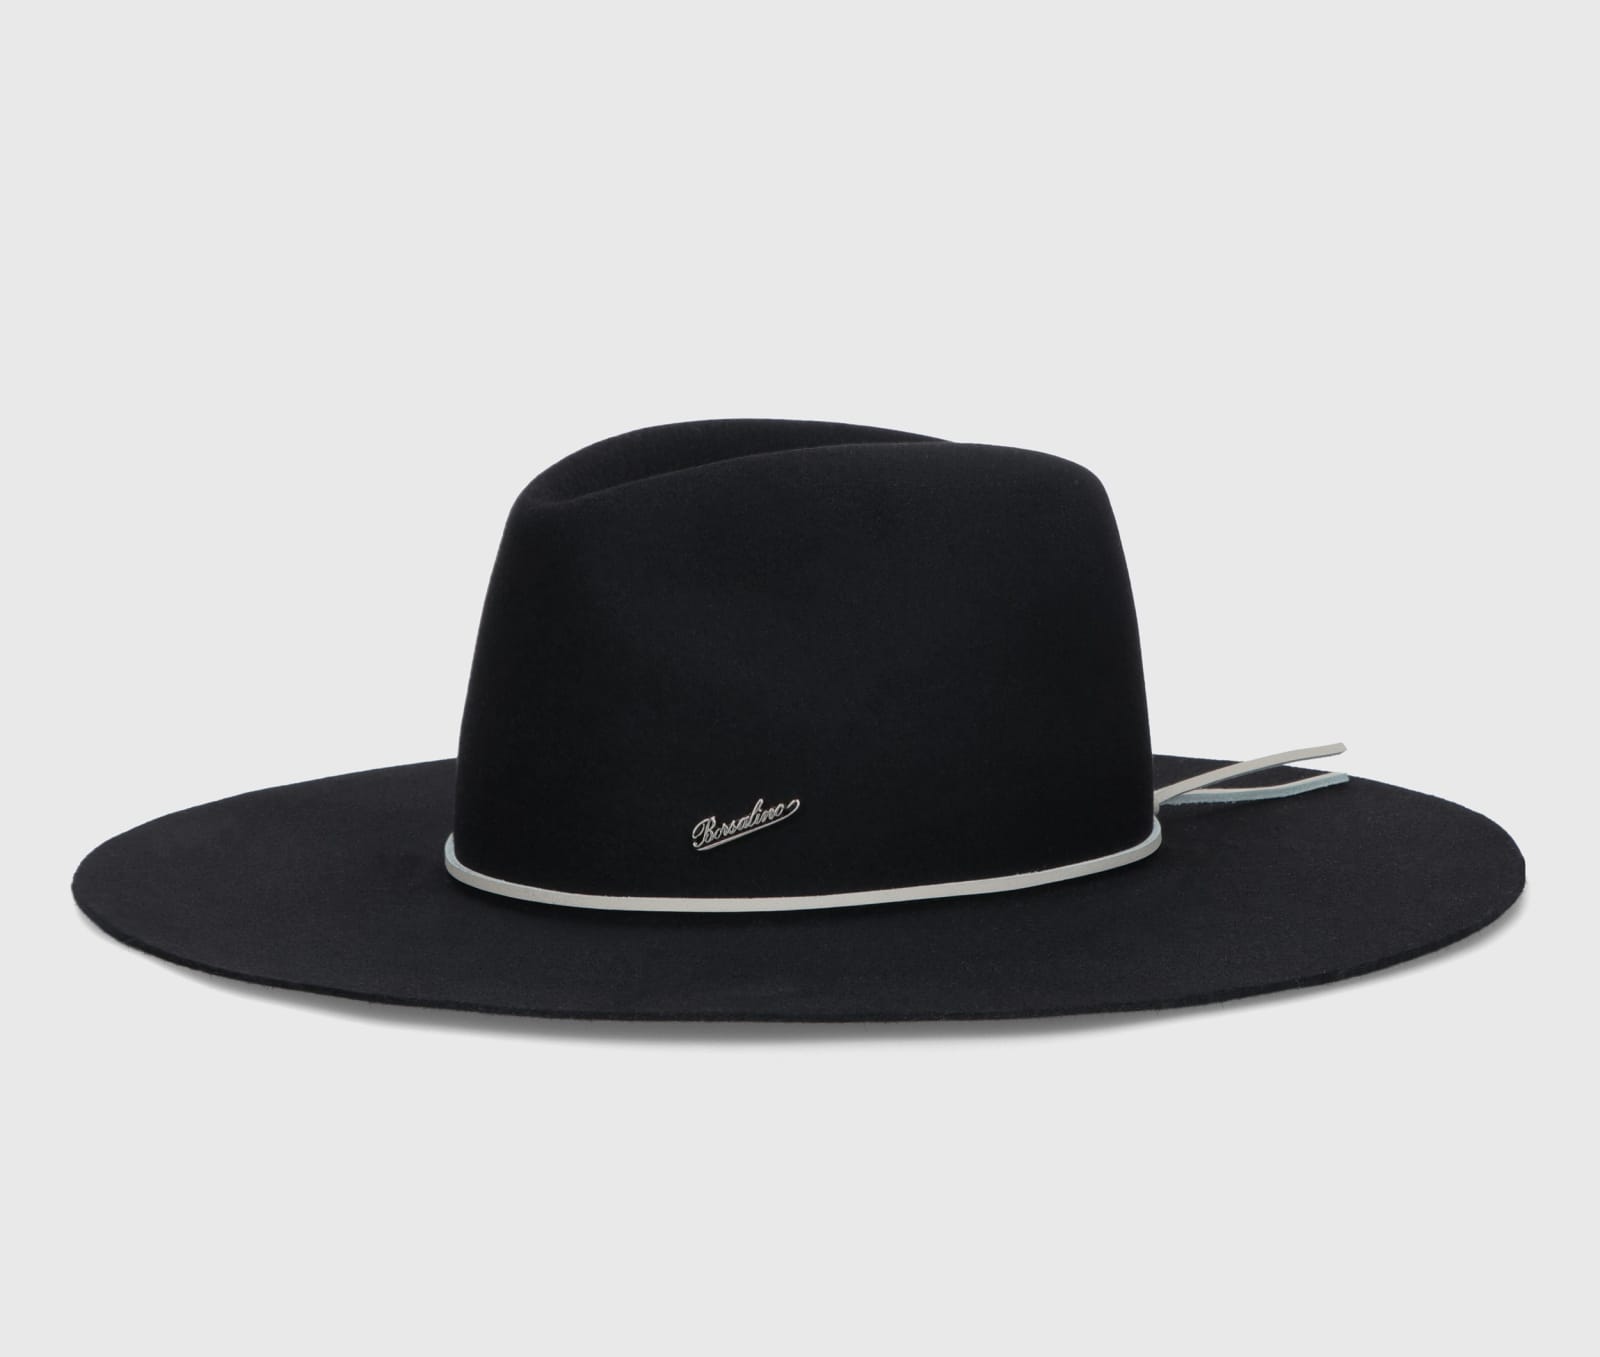 Borsalino Heath Alessandria Brushed Felt Leather Hatband In Black